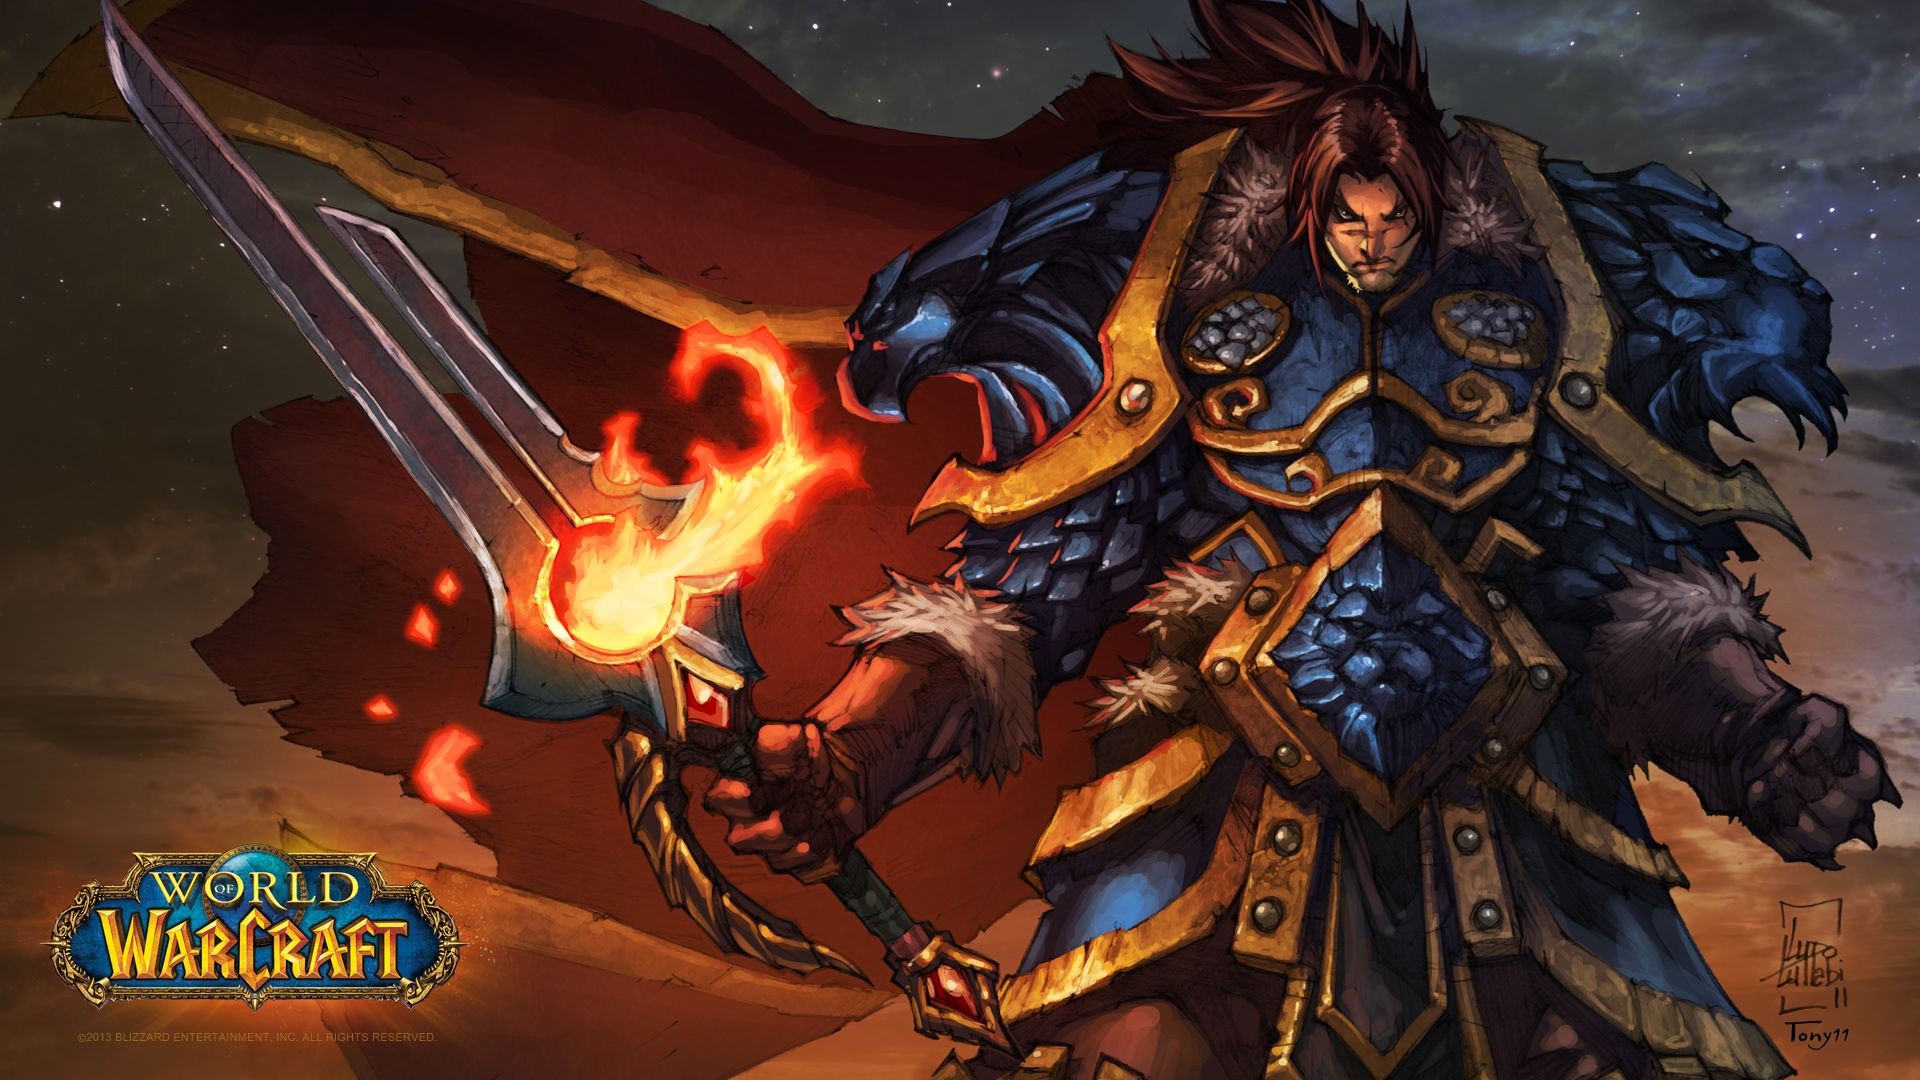 General 1920x1080 Warcraft World of Warcraft video games PC gaming 2013 (Year) video game art fantasy art Blizzard Entertainment